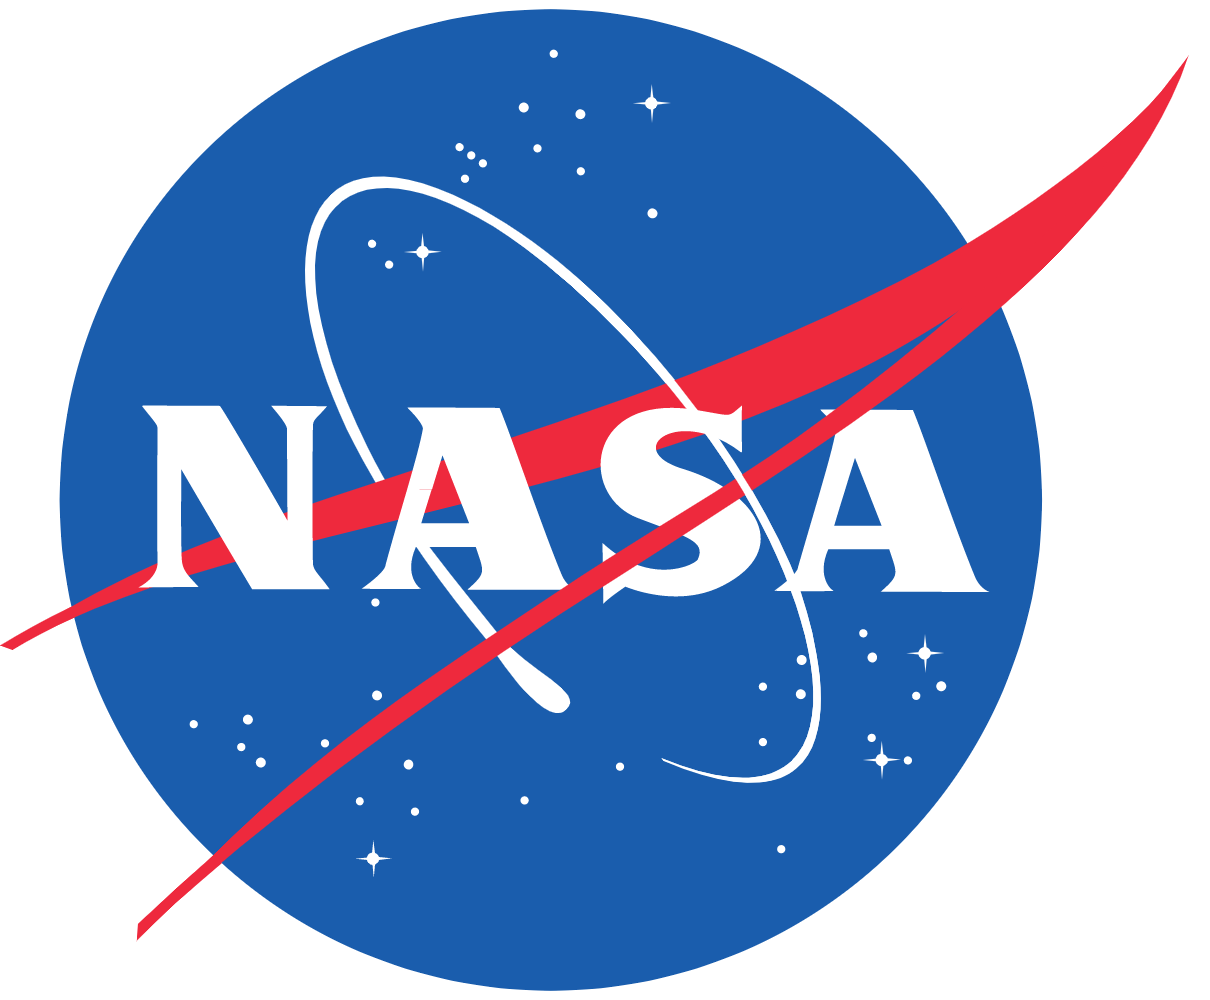 NASA每日一天文图